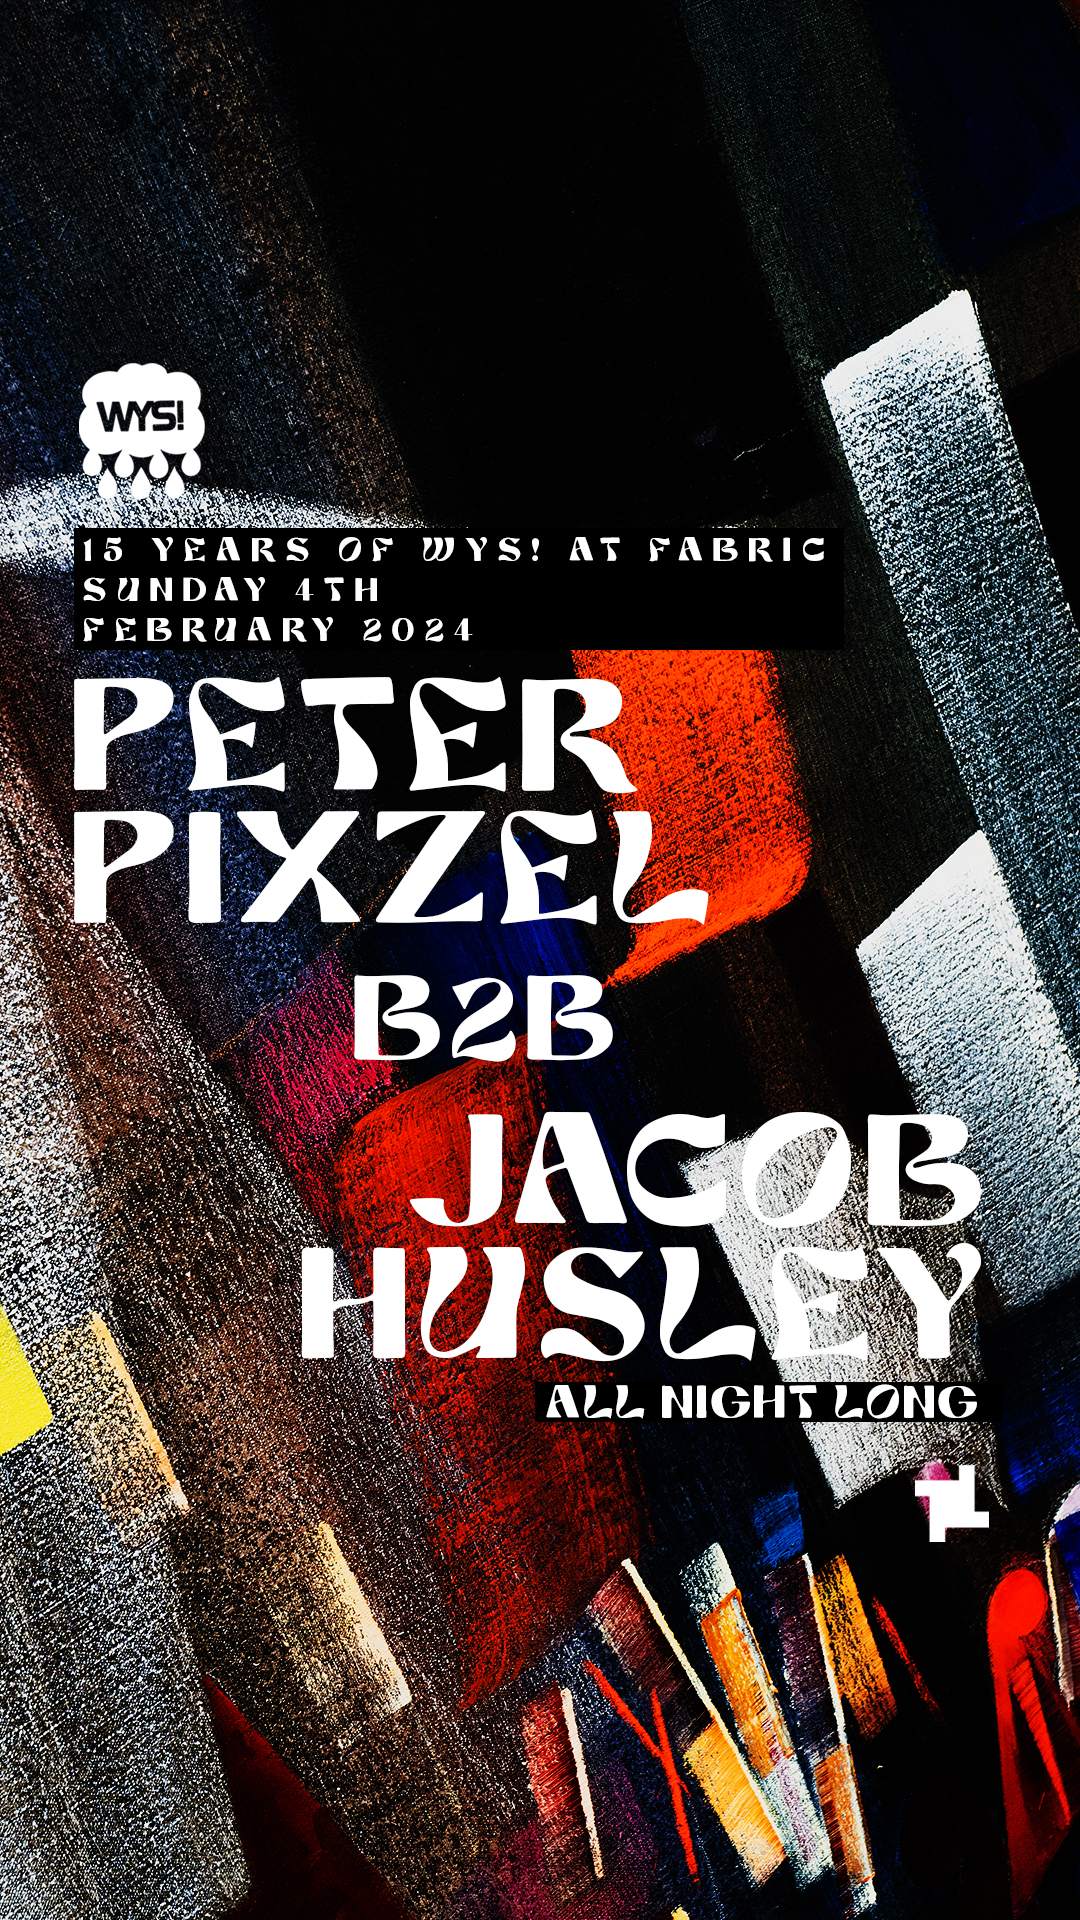 C.A.Y.A: WetYourSelf! 17th Birthday - Jacob Husley B2B Peter Pixzel (All Night Long) - フライヤー表